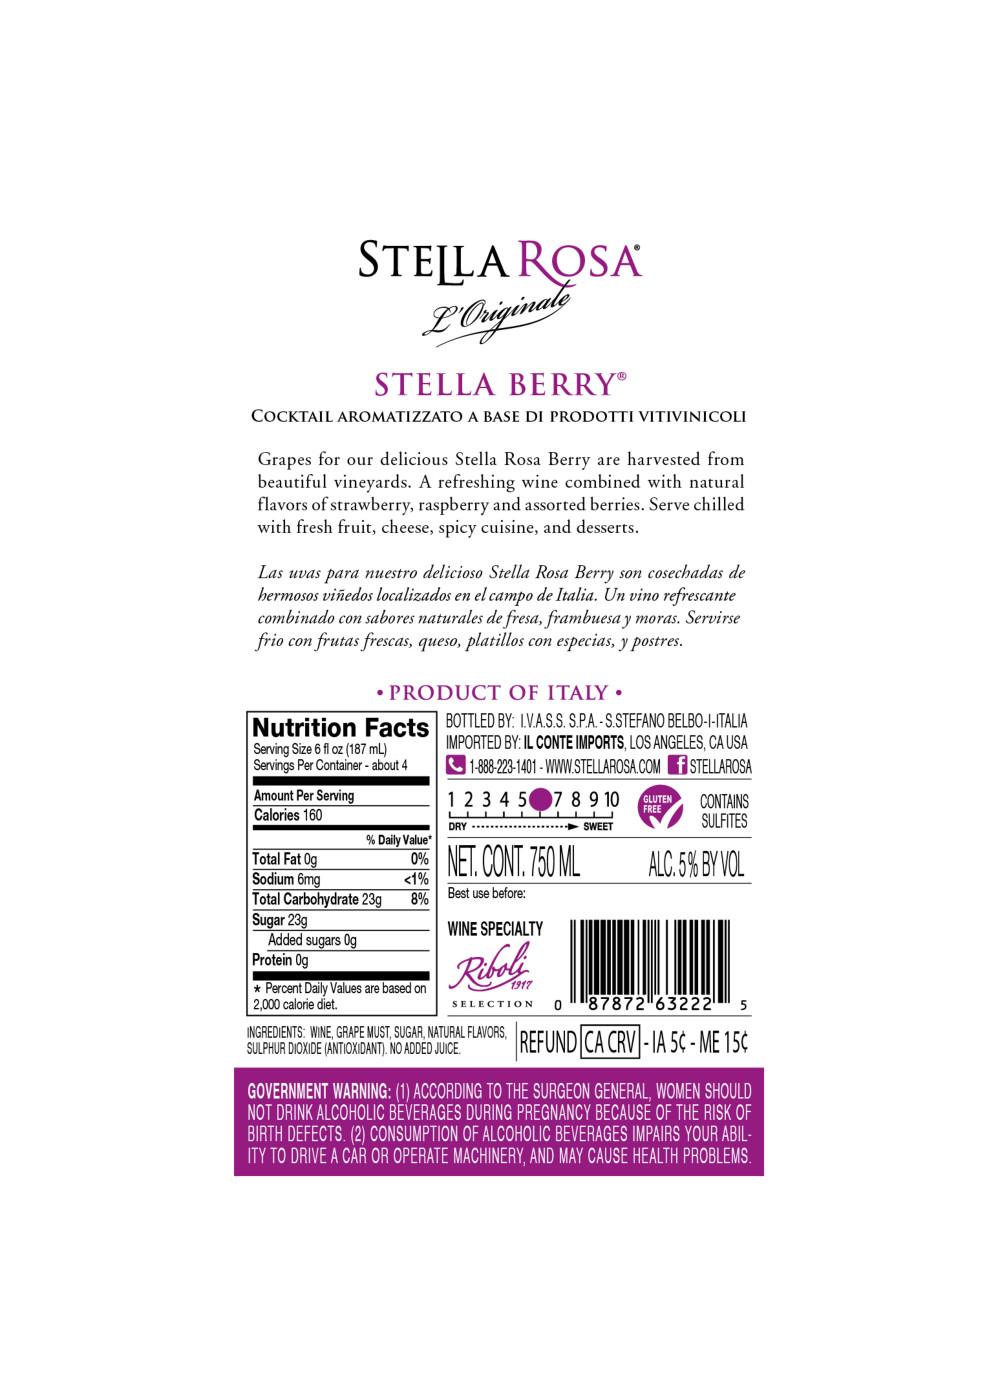 Stella Rosa Stella Berry; image 4 of 7